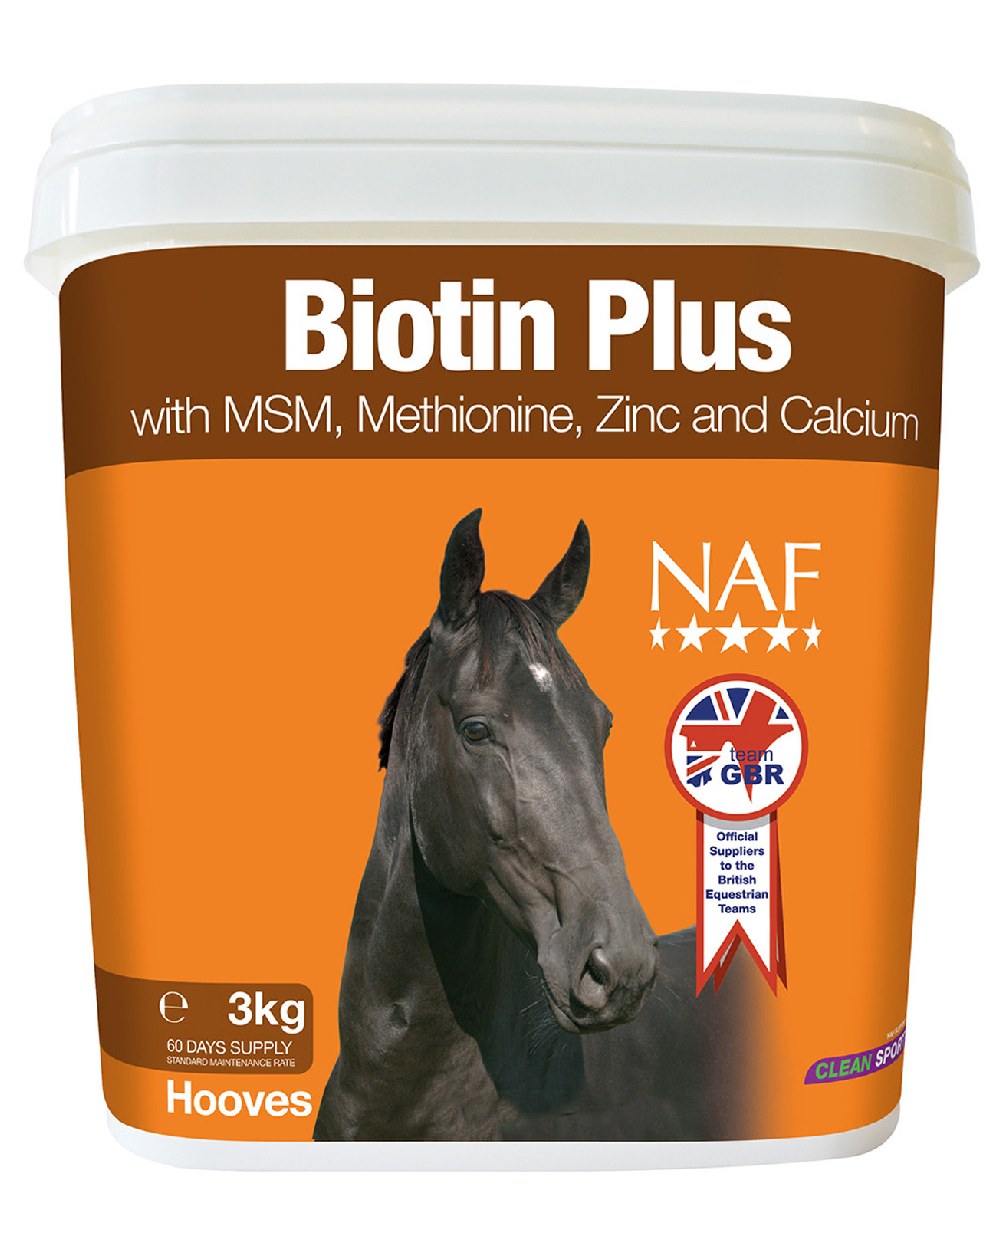 NAF Biotin Plus 3 kg on white background